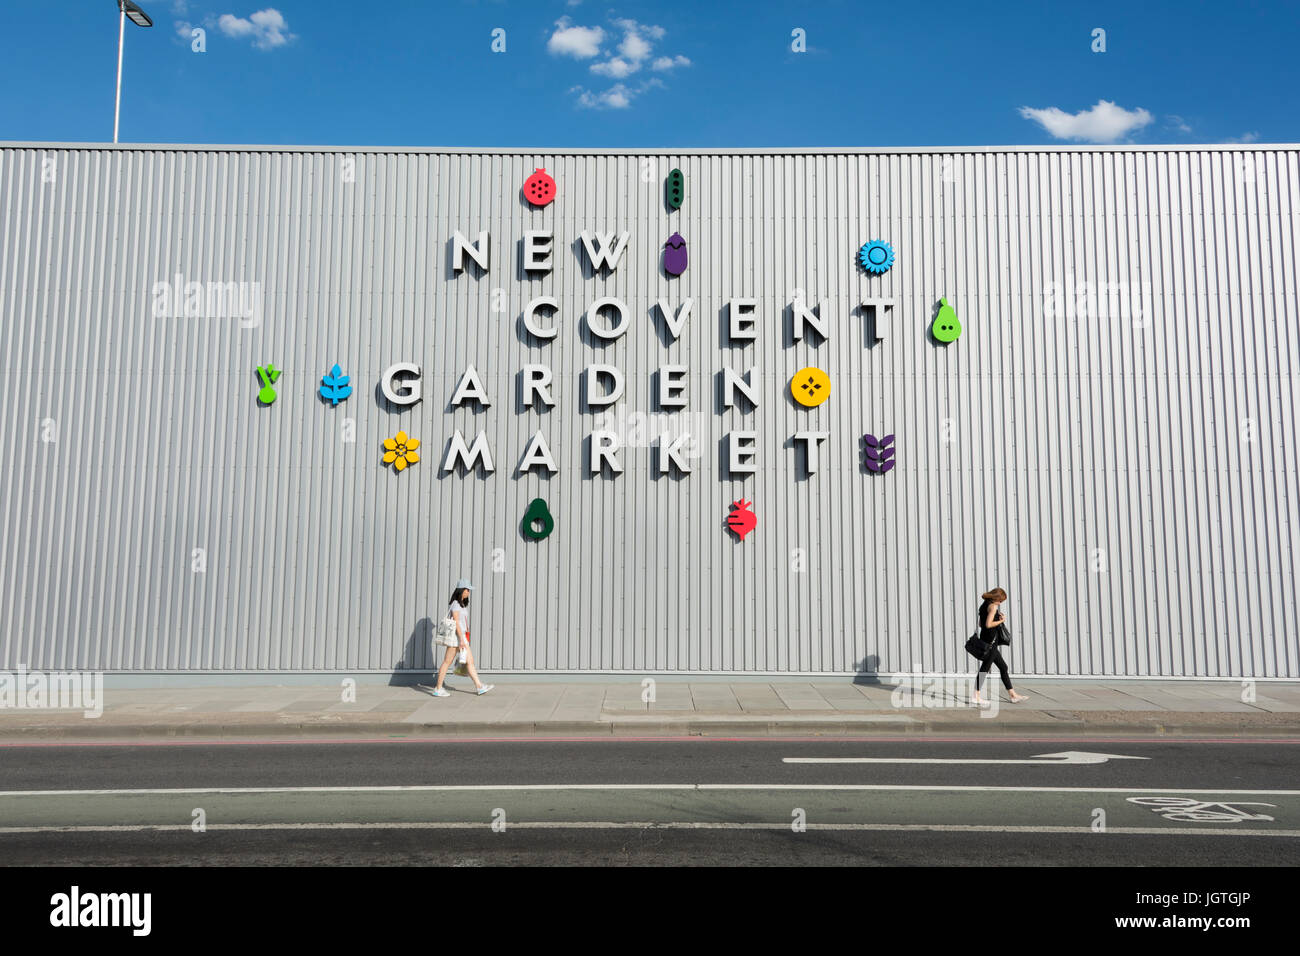 The New Covent Garden Market at Nine Elms, Battersea, London, England, UK Stock Photo